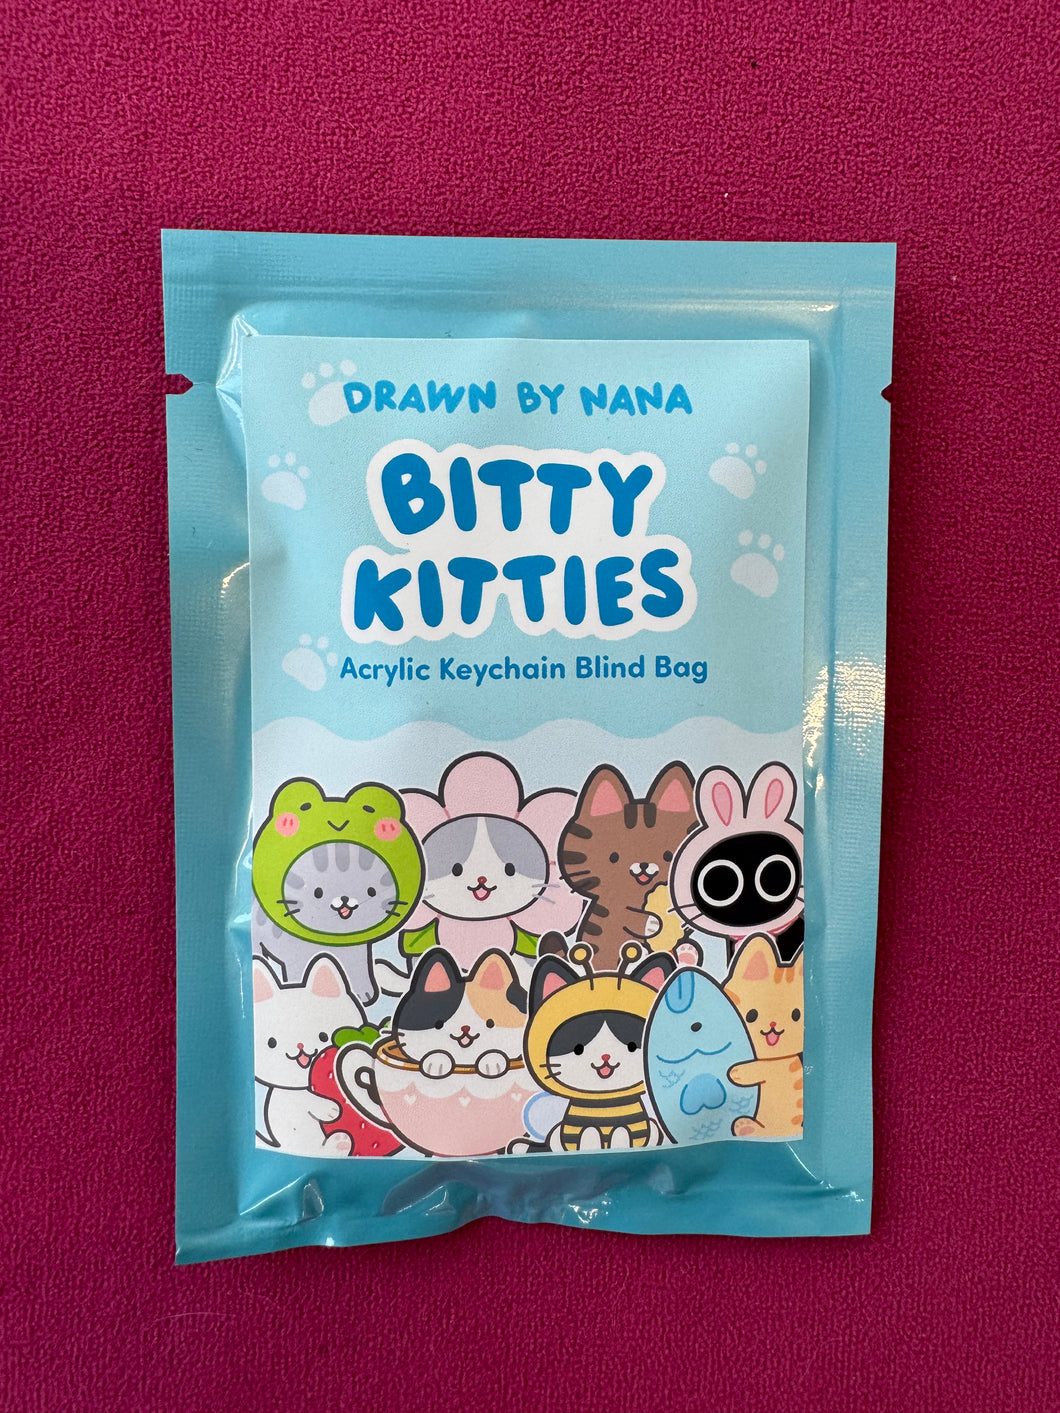 Bitty Kitties Arcylic Keychain Blind Bag by Nana